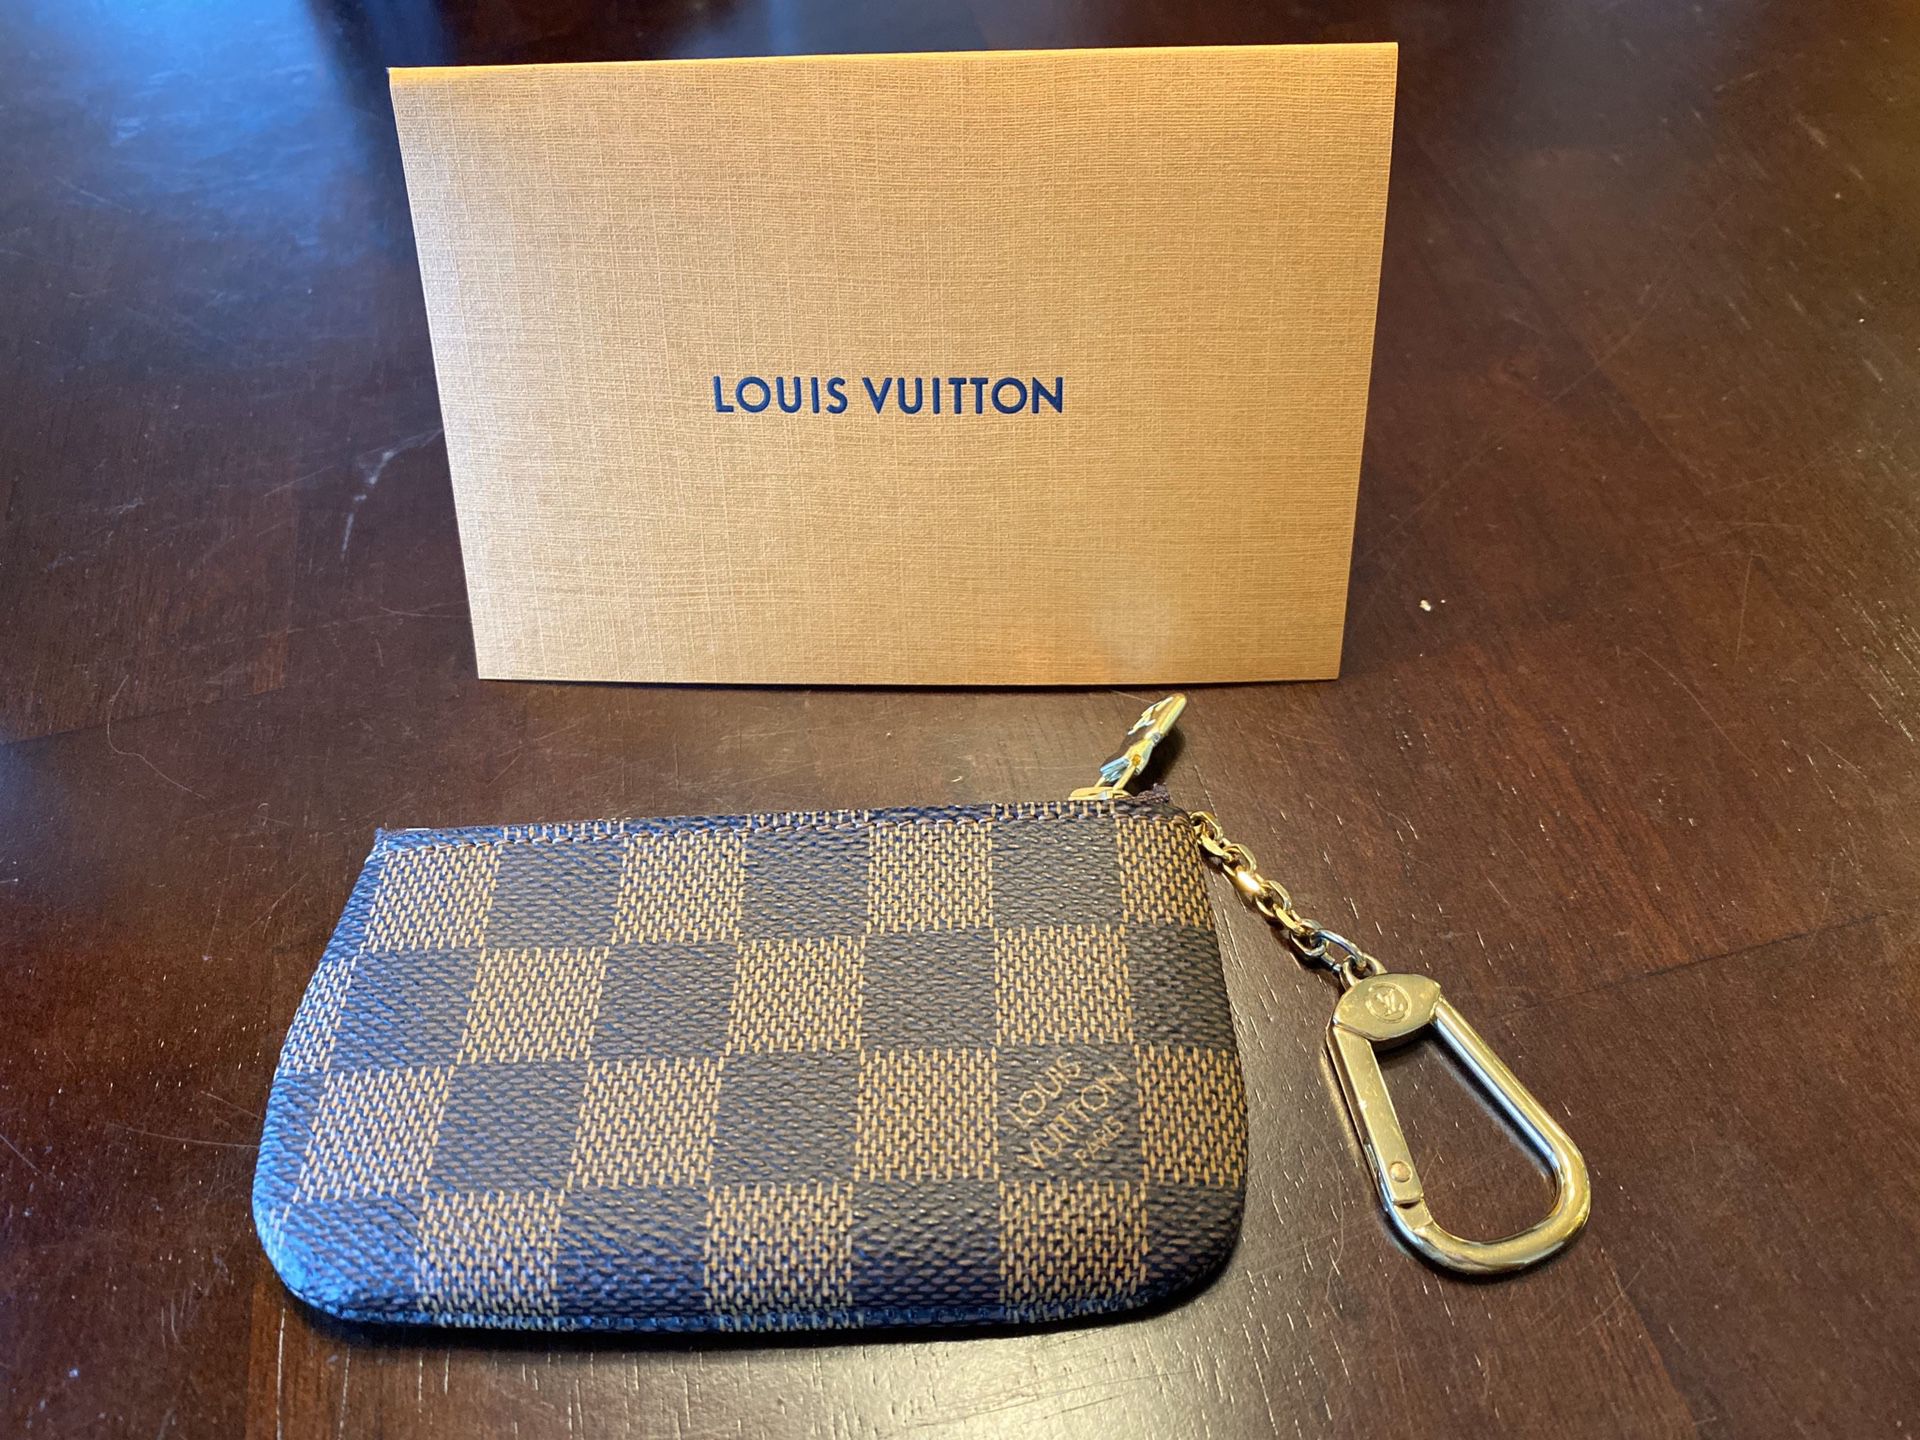 New Louis Vuitton coin pouch